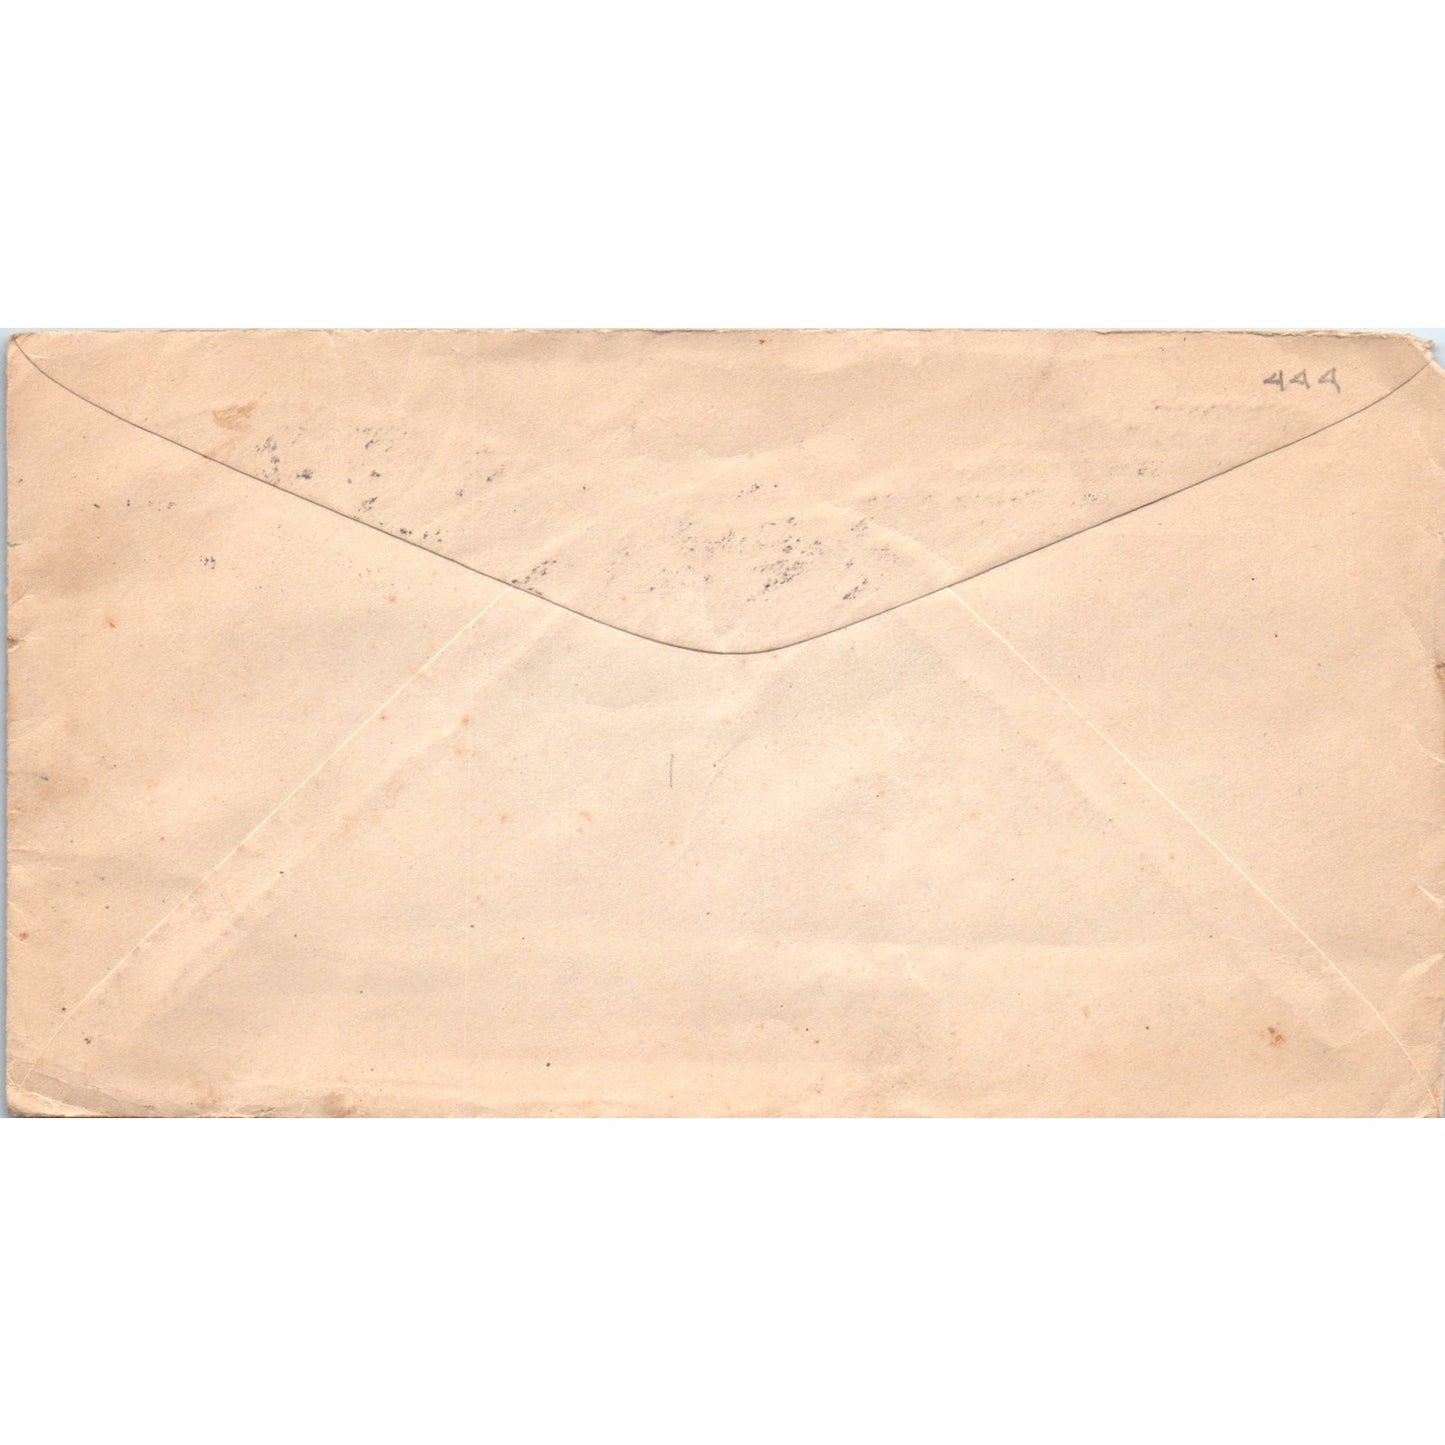 1922 C.B. & H.M Taylor General Agents Philadelphia Postal Cover Envelope TG7-PC2